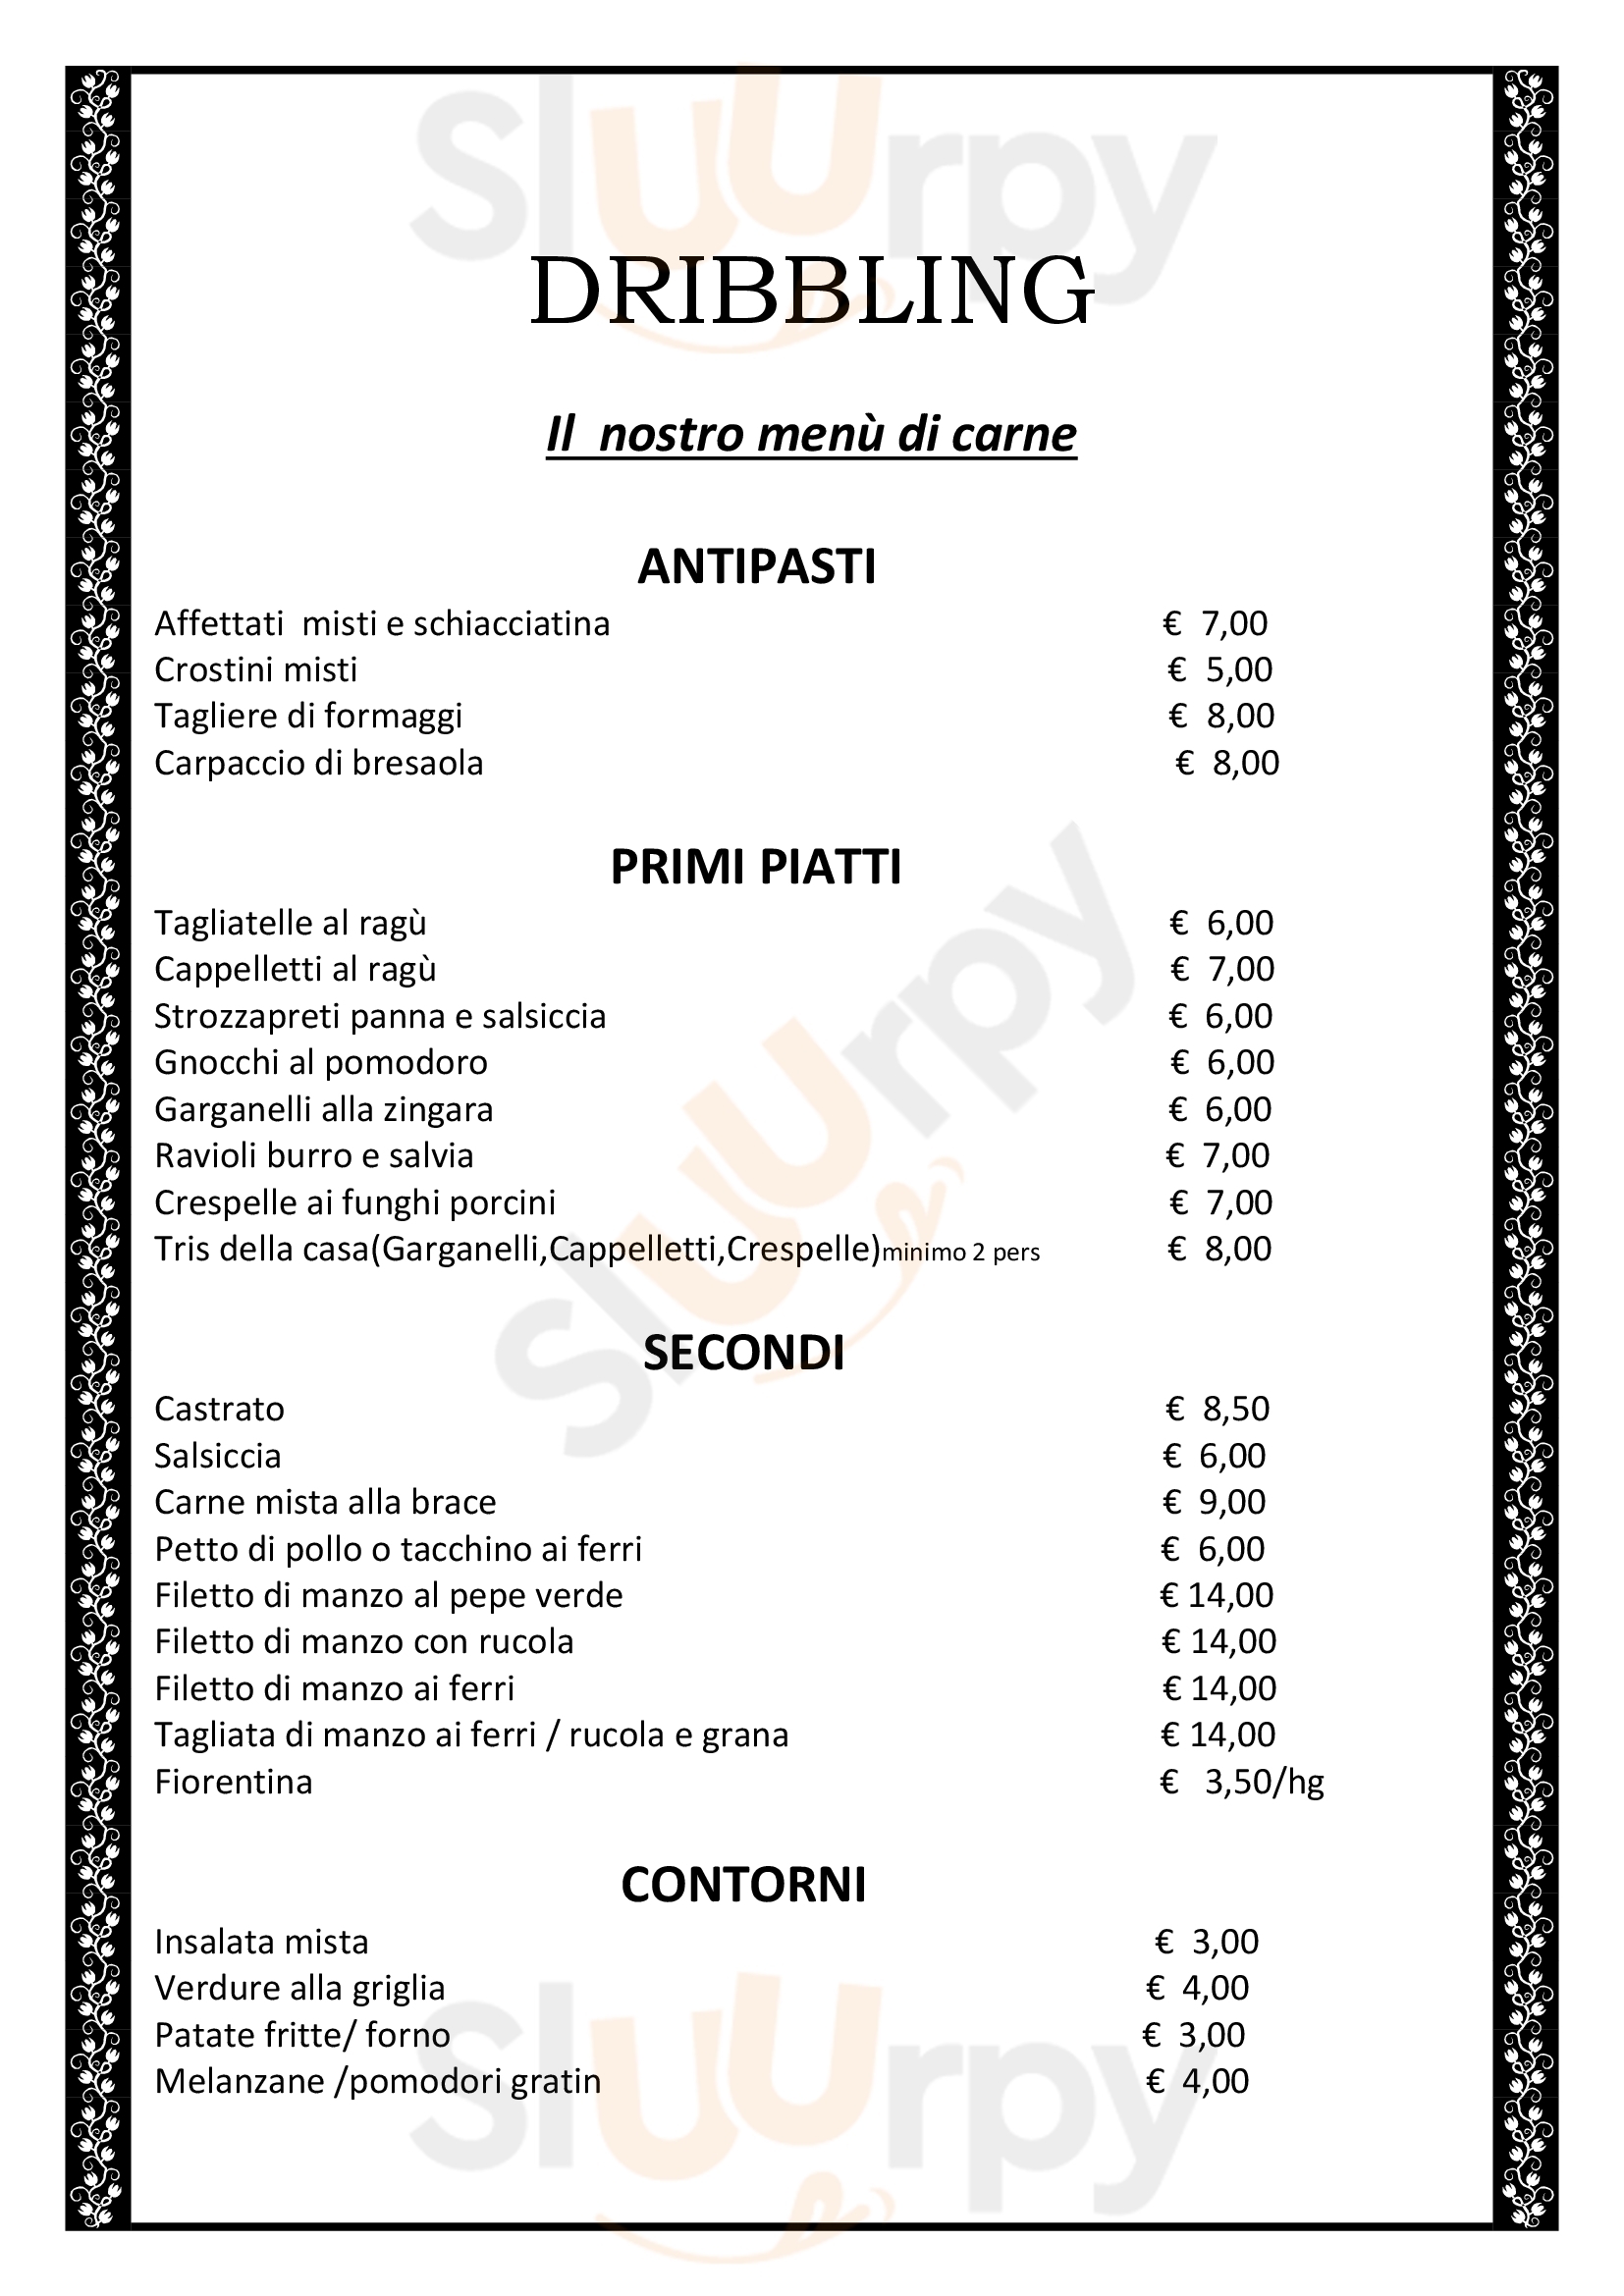 Dribbling Ristorante Pizzeria Ravenna menù 1 pagina